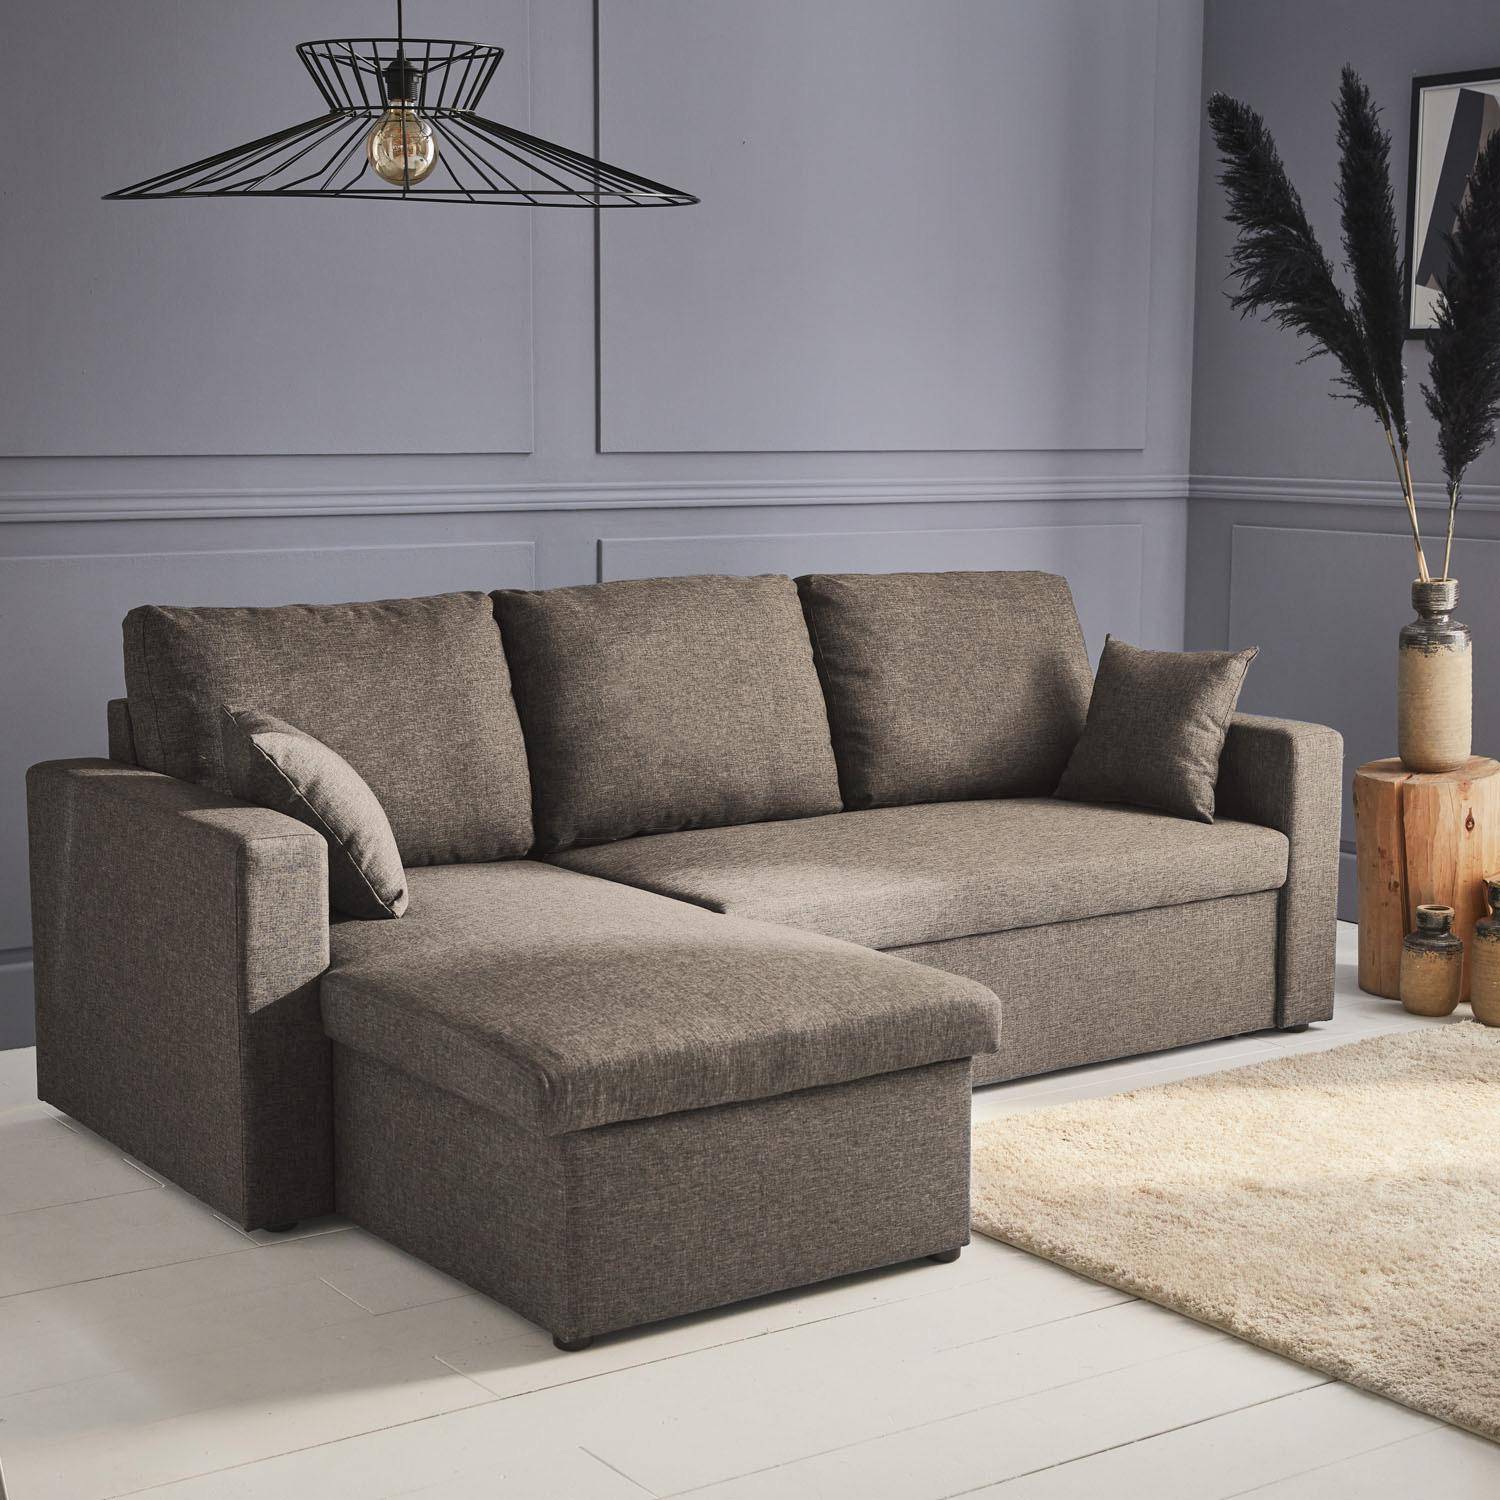 3-seater reversible brown corner sofa bed with storage box, brown, L219xD81xH68cm, IDA Photo1